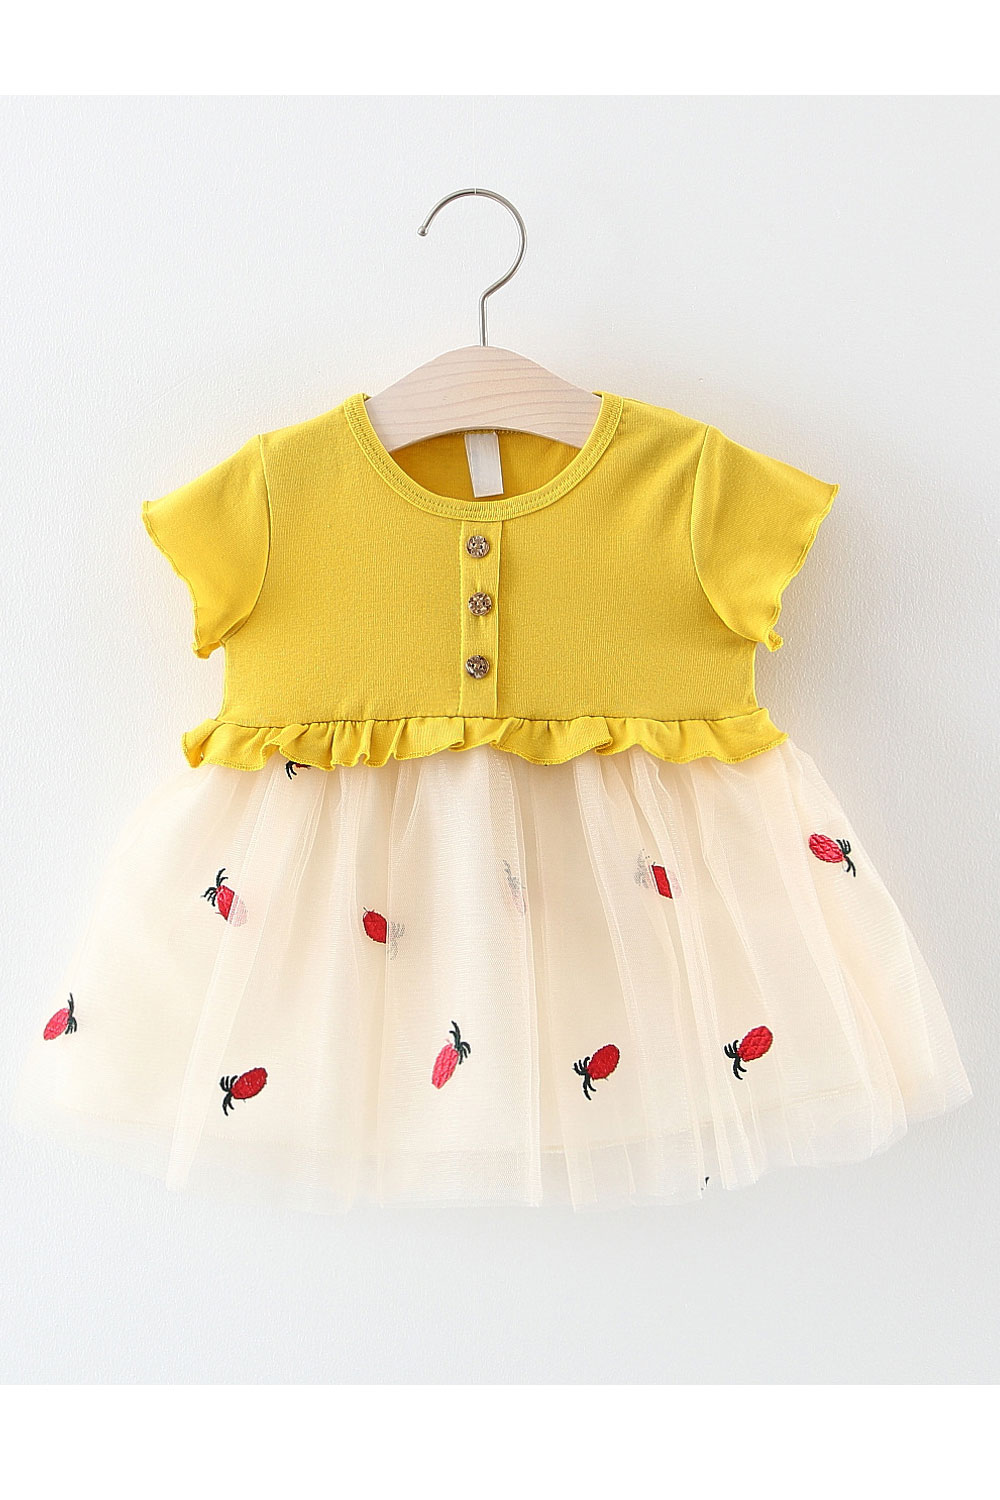 Unoamtch Baby & Toddler Girls New Stylish Round Neck T Shorts Sleeved Pineapple Embroidery Net Gauze Skirt Style Summer Princess Dress